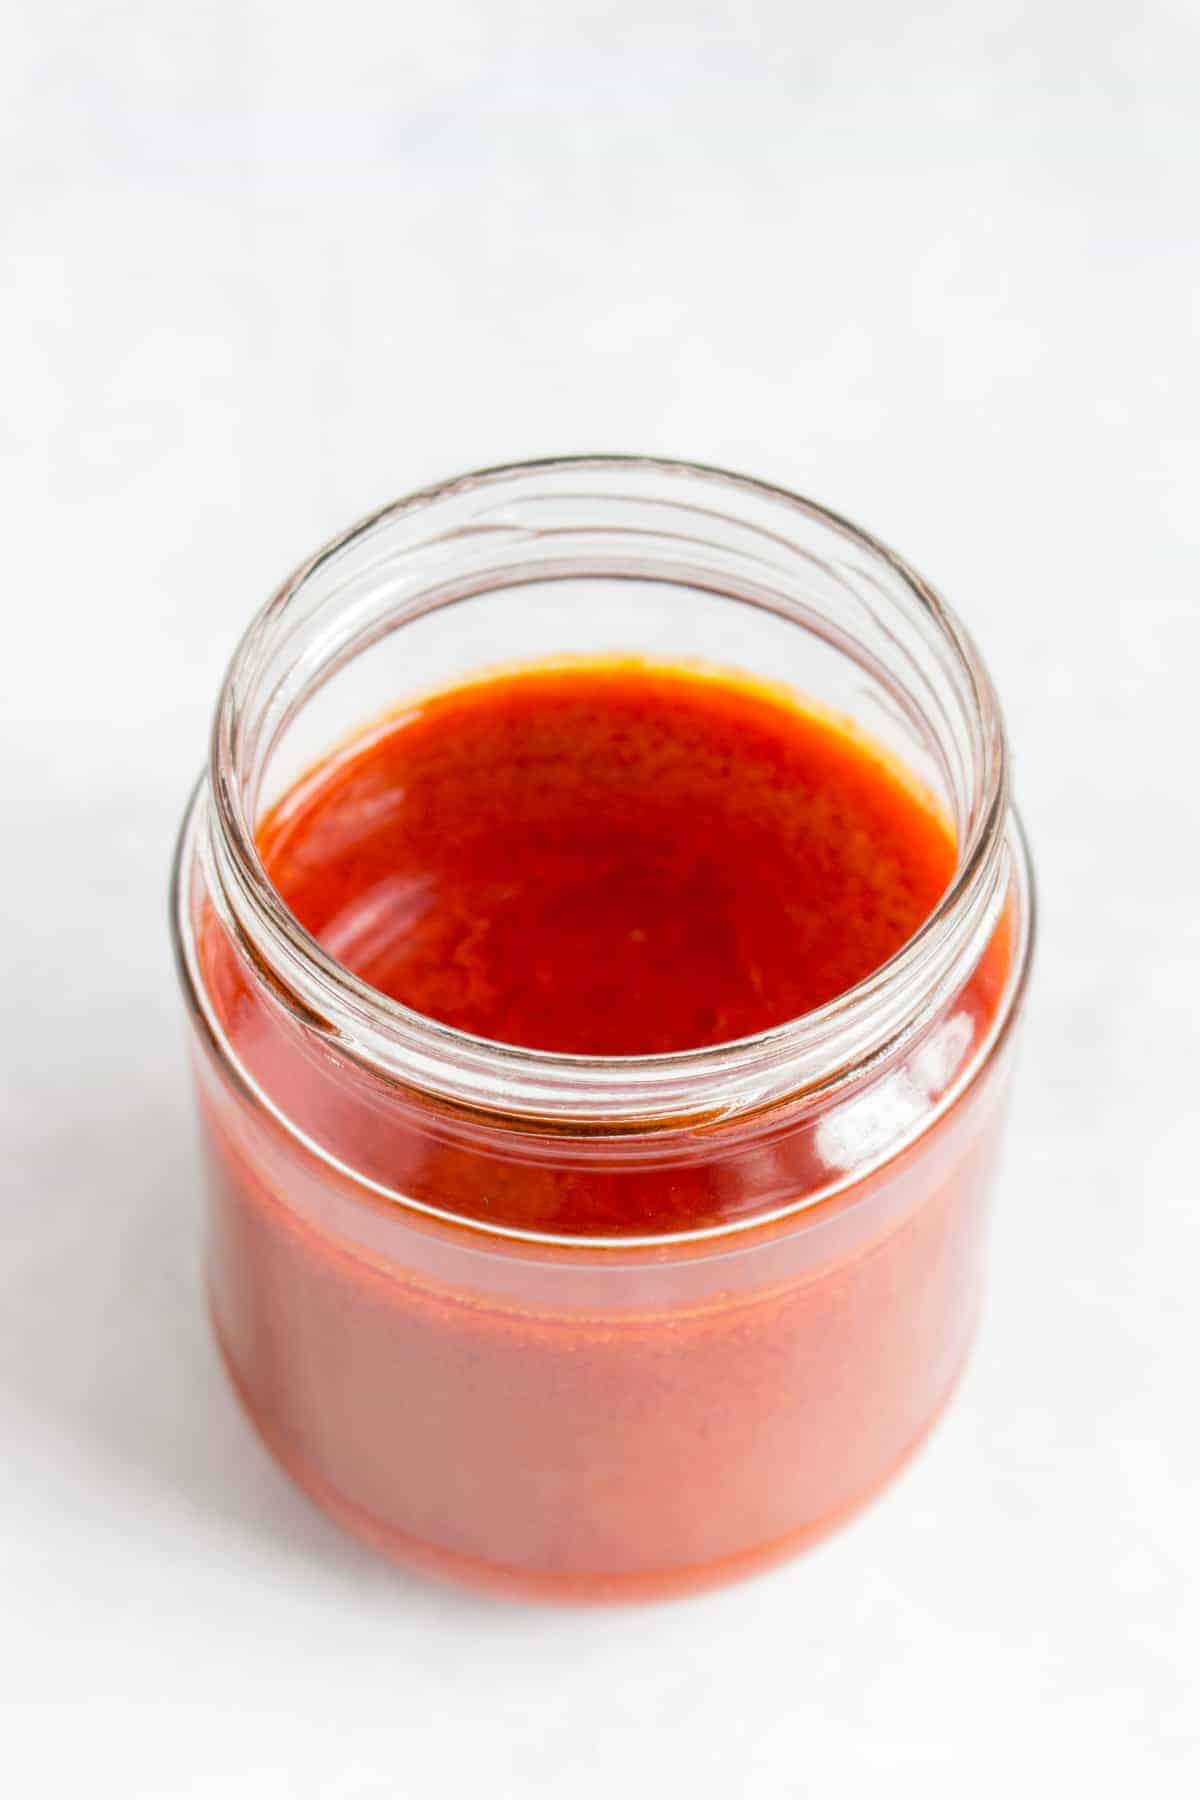 A jar of buffalo sauce.